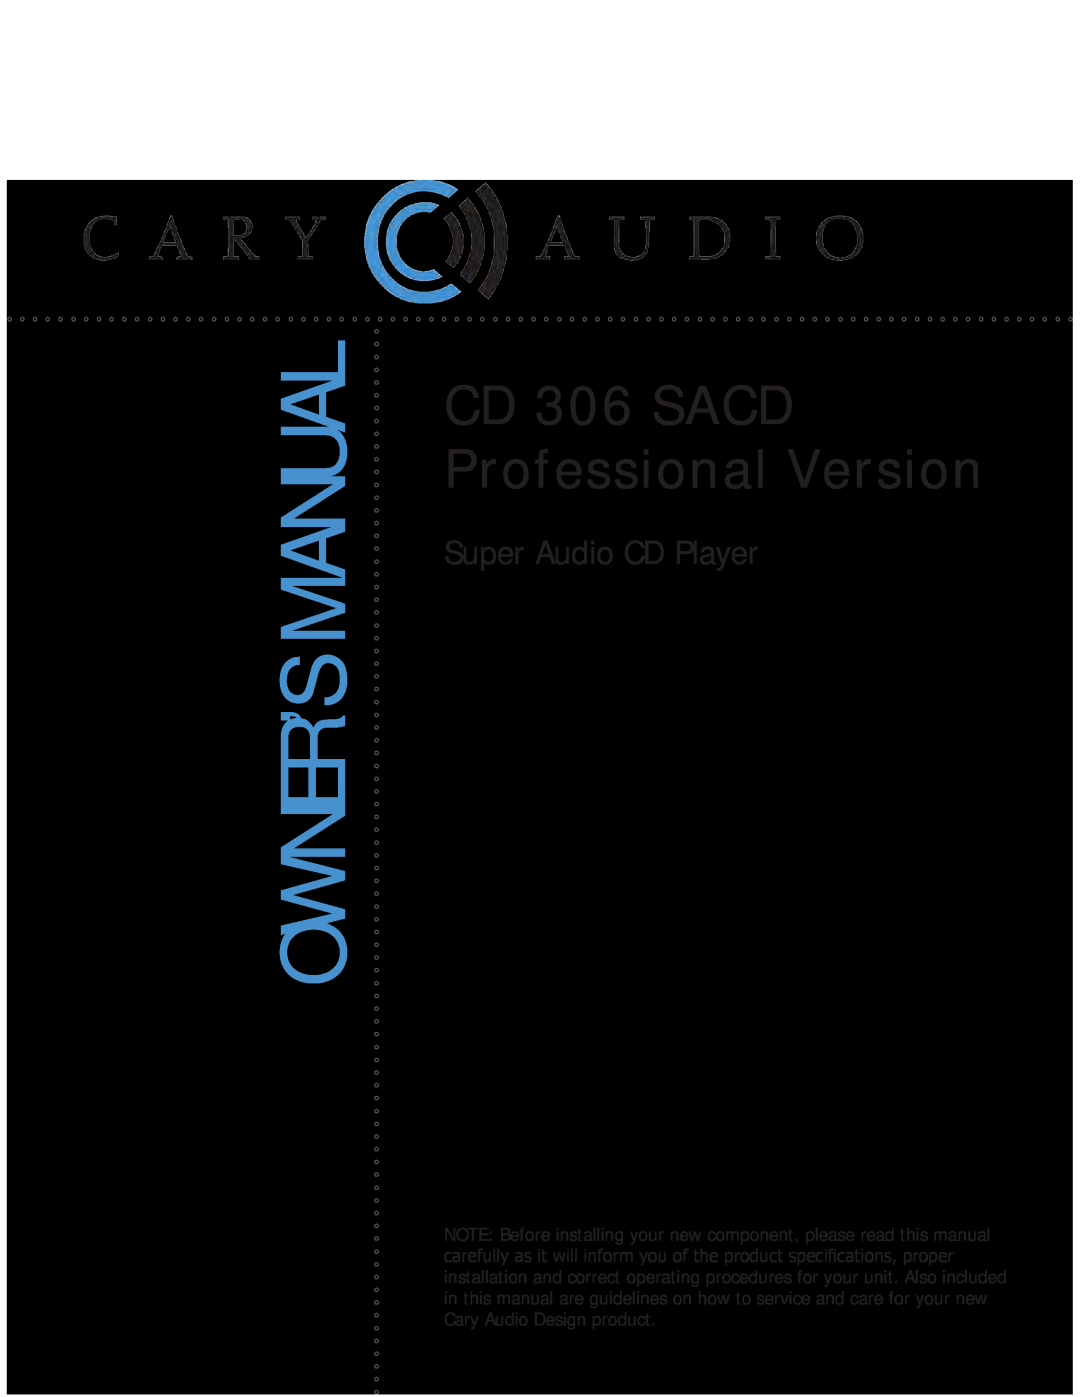 Cary Audio Design CD 306 SACD owner manual 